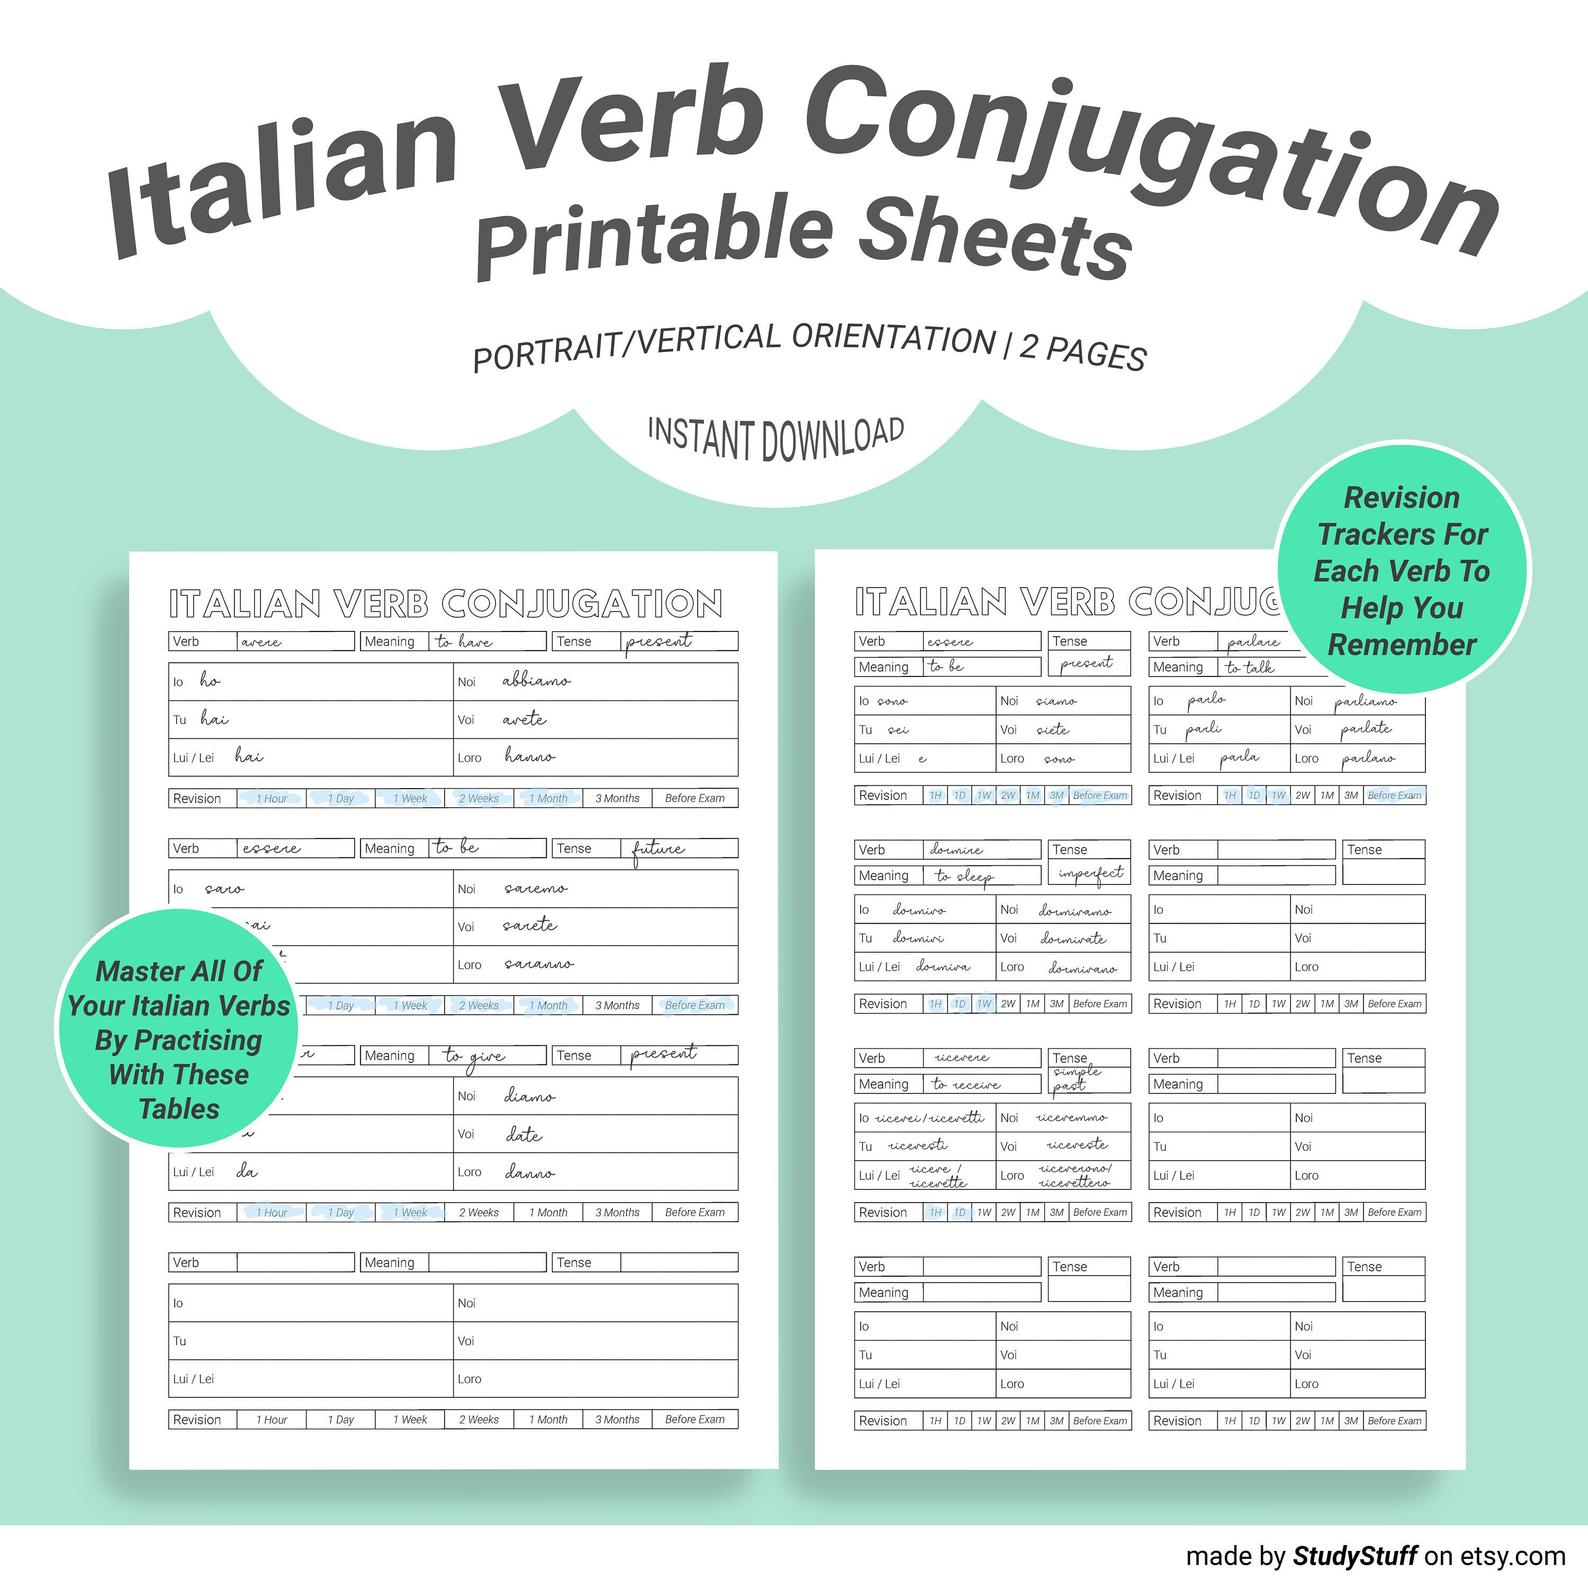 Italian Verb Conjugation Table